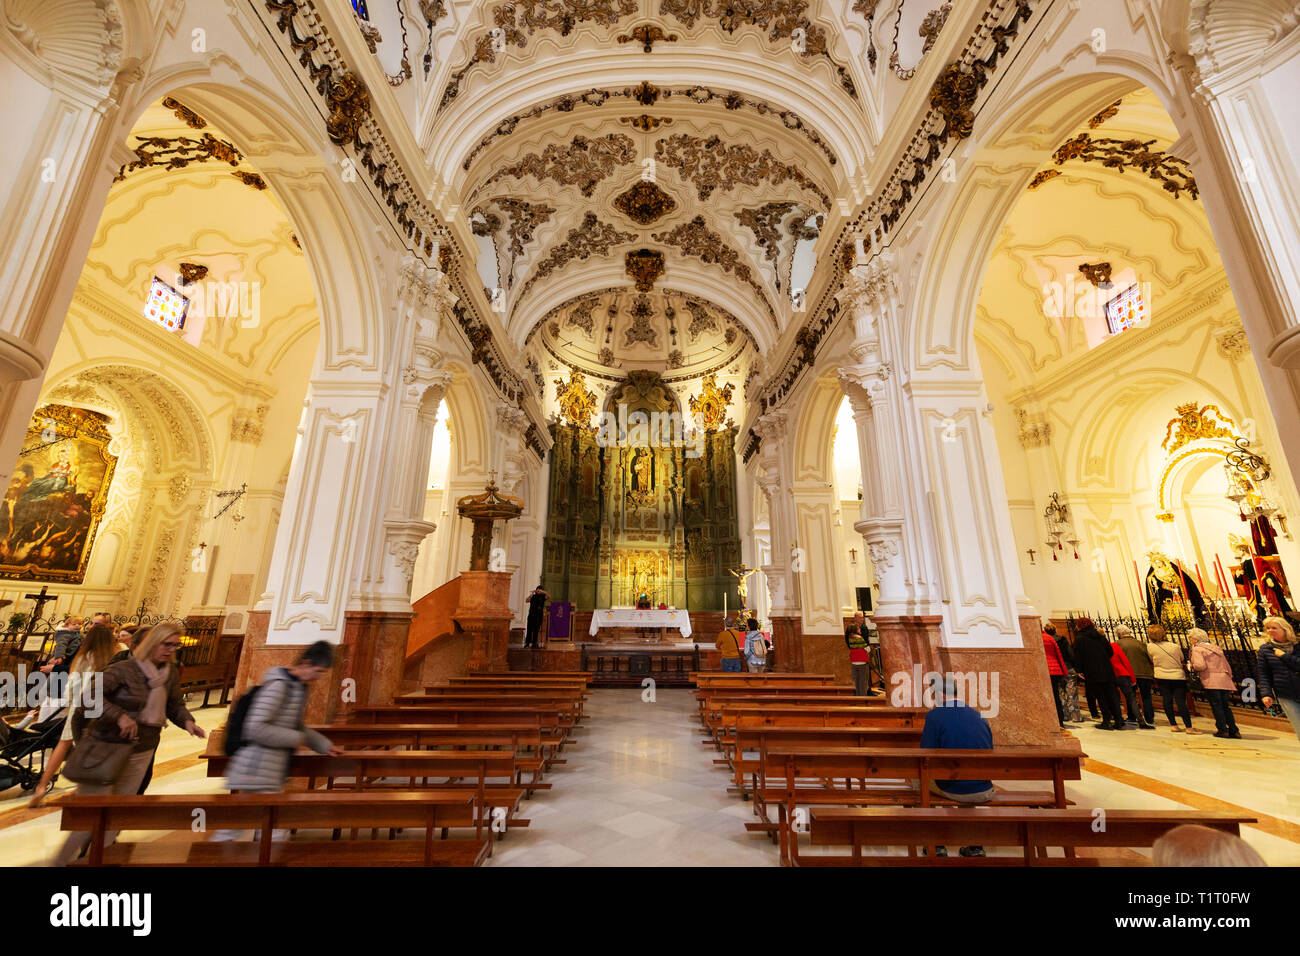 The nave in the interior of the Iglesia de Santiago (Church of Santiago), the oldest Roman Catholic church in Malaga, Andalucia, Spain Europe Stock Photo